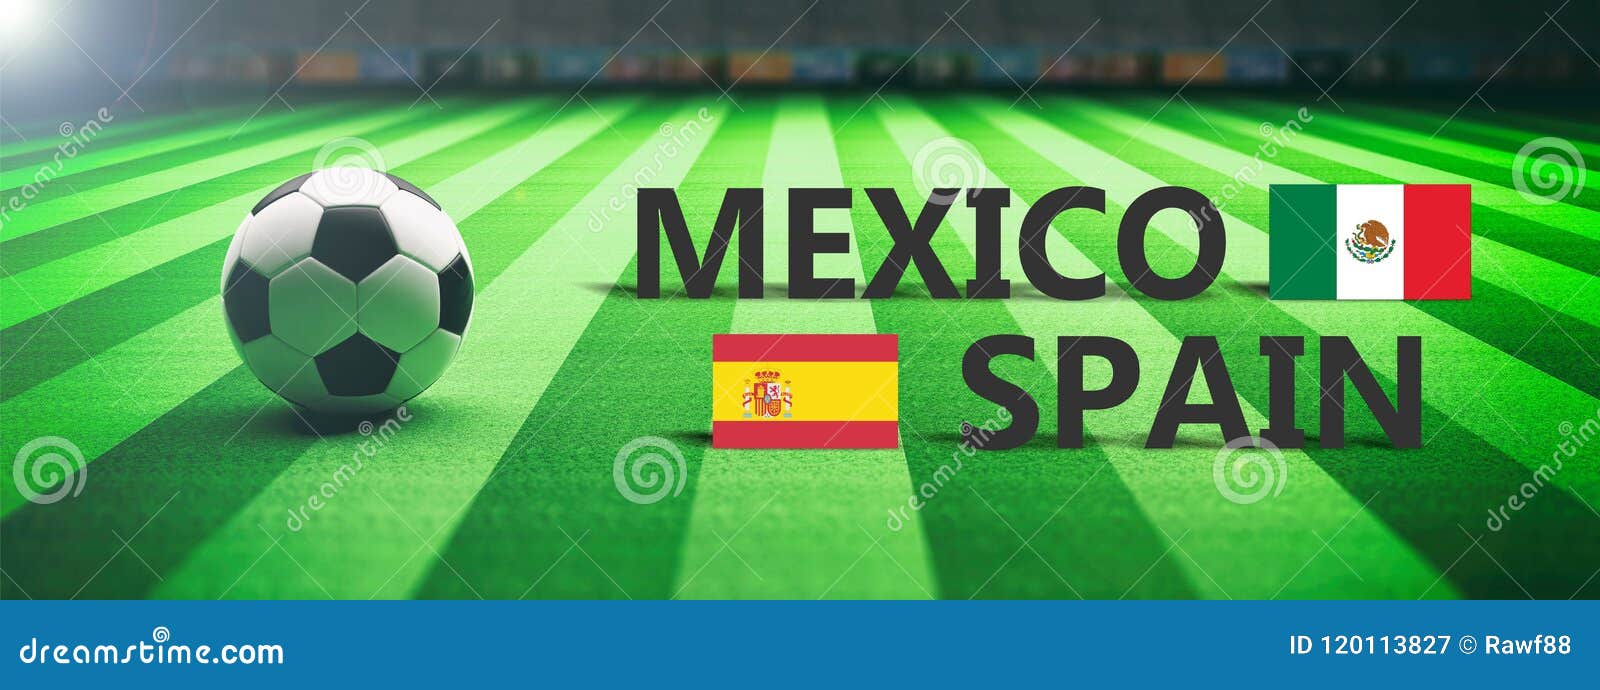 Soccer, Football Match, Mexico Vs Spain, 3d Illustration Stock